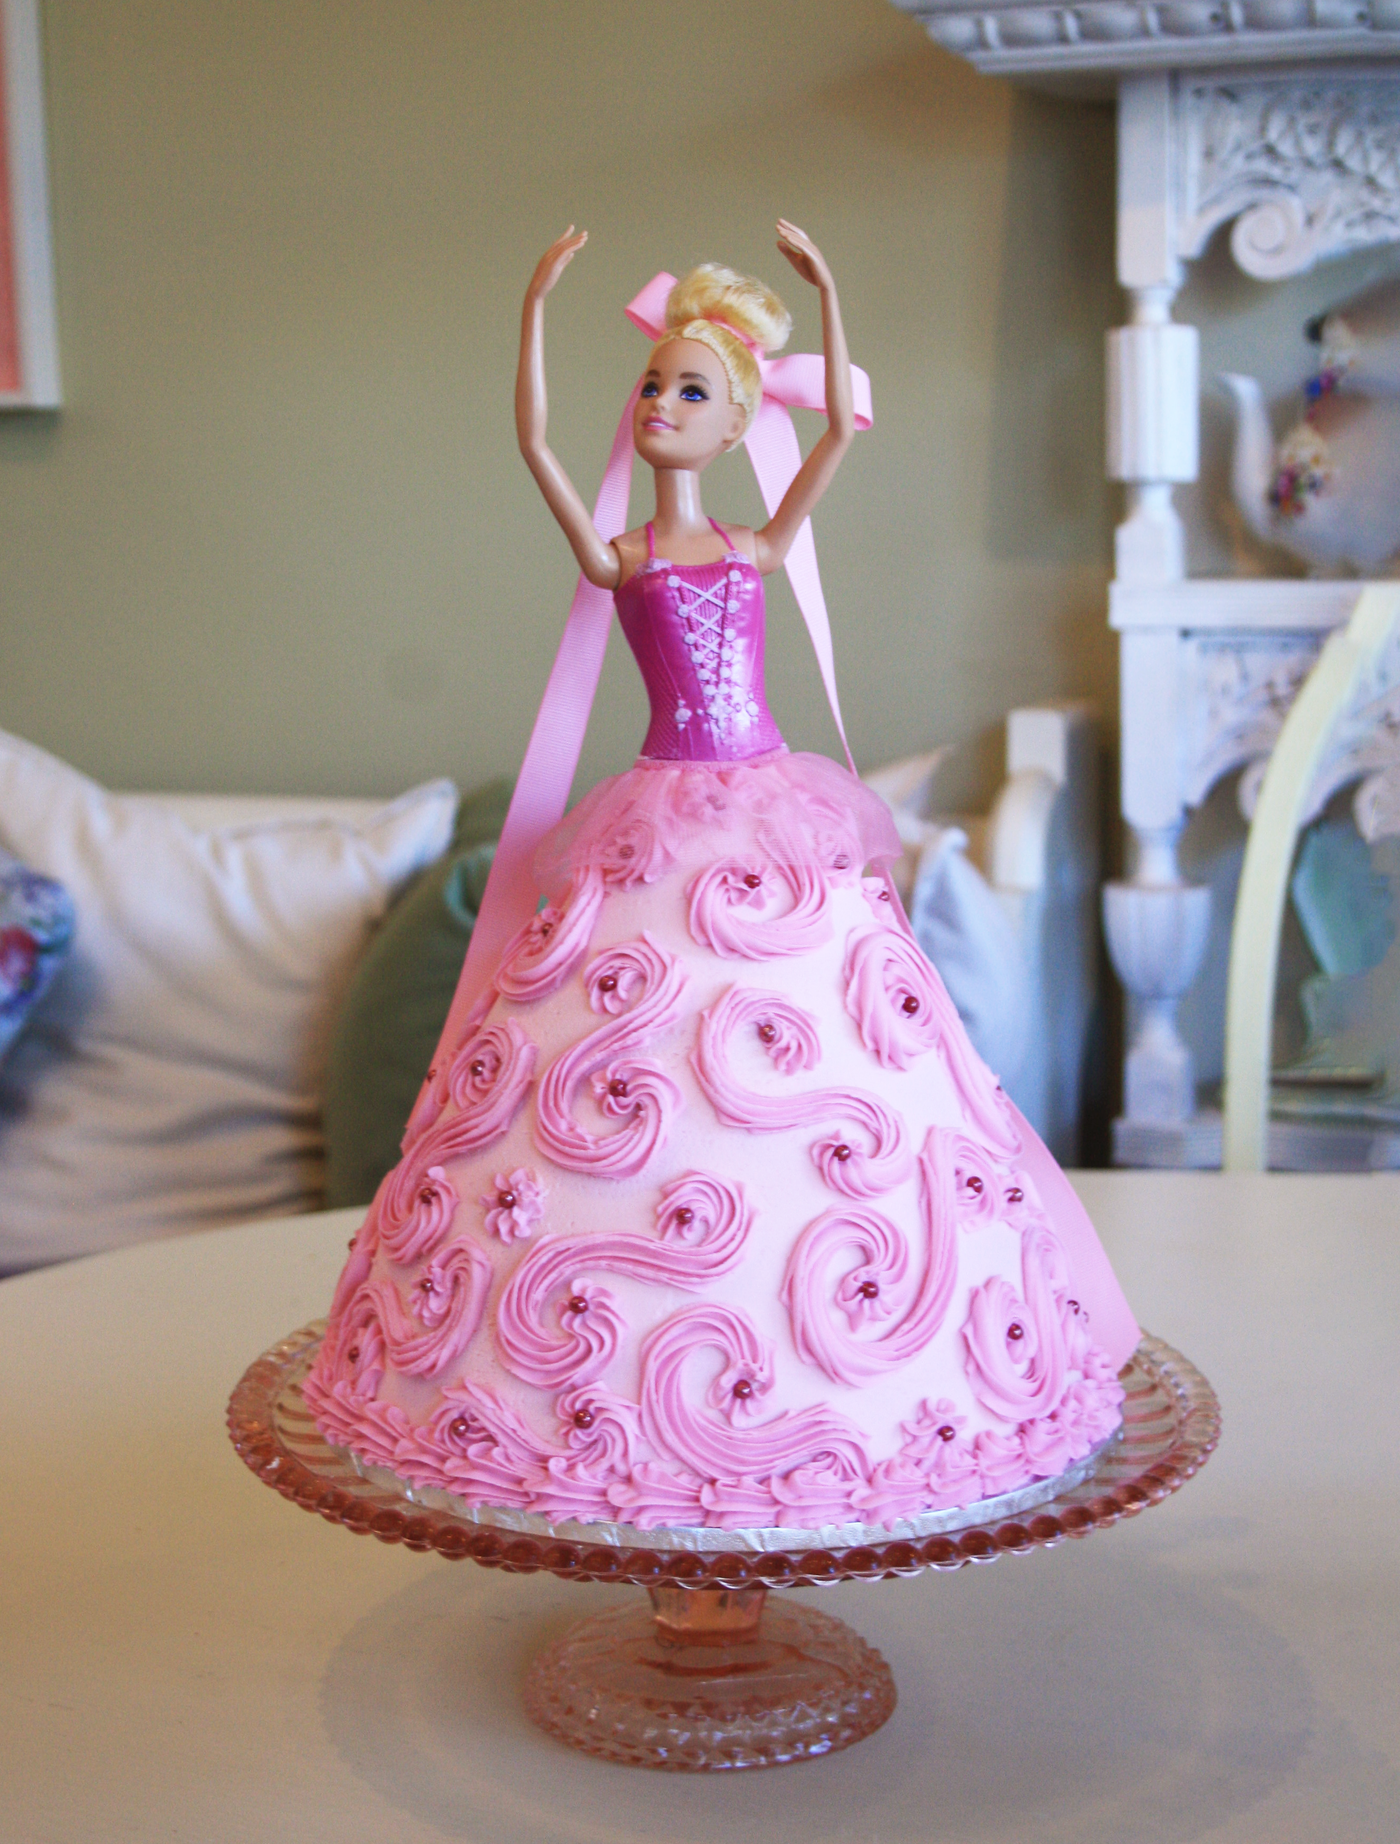 Barbie - Decorated Cake by Celeste - CakesDecor